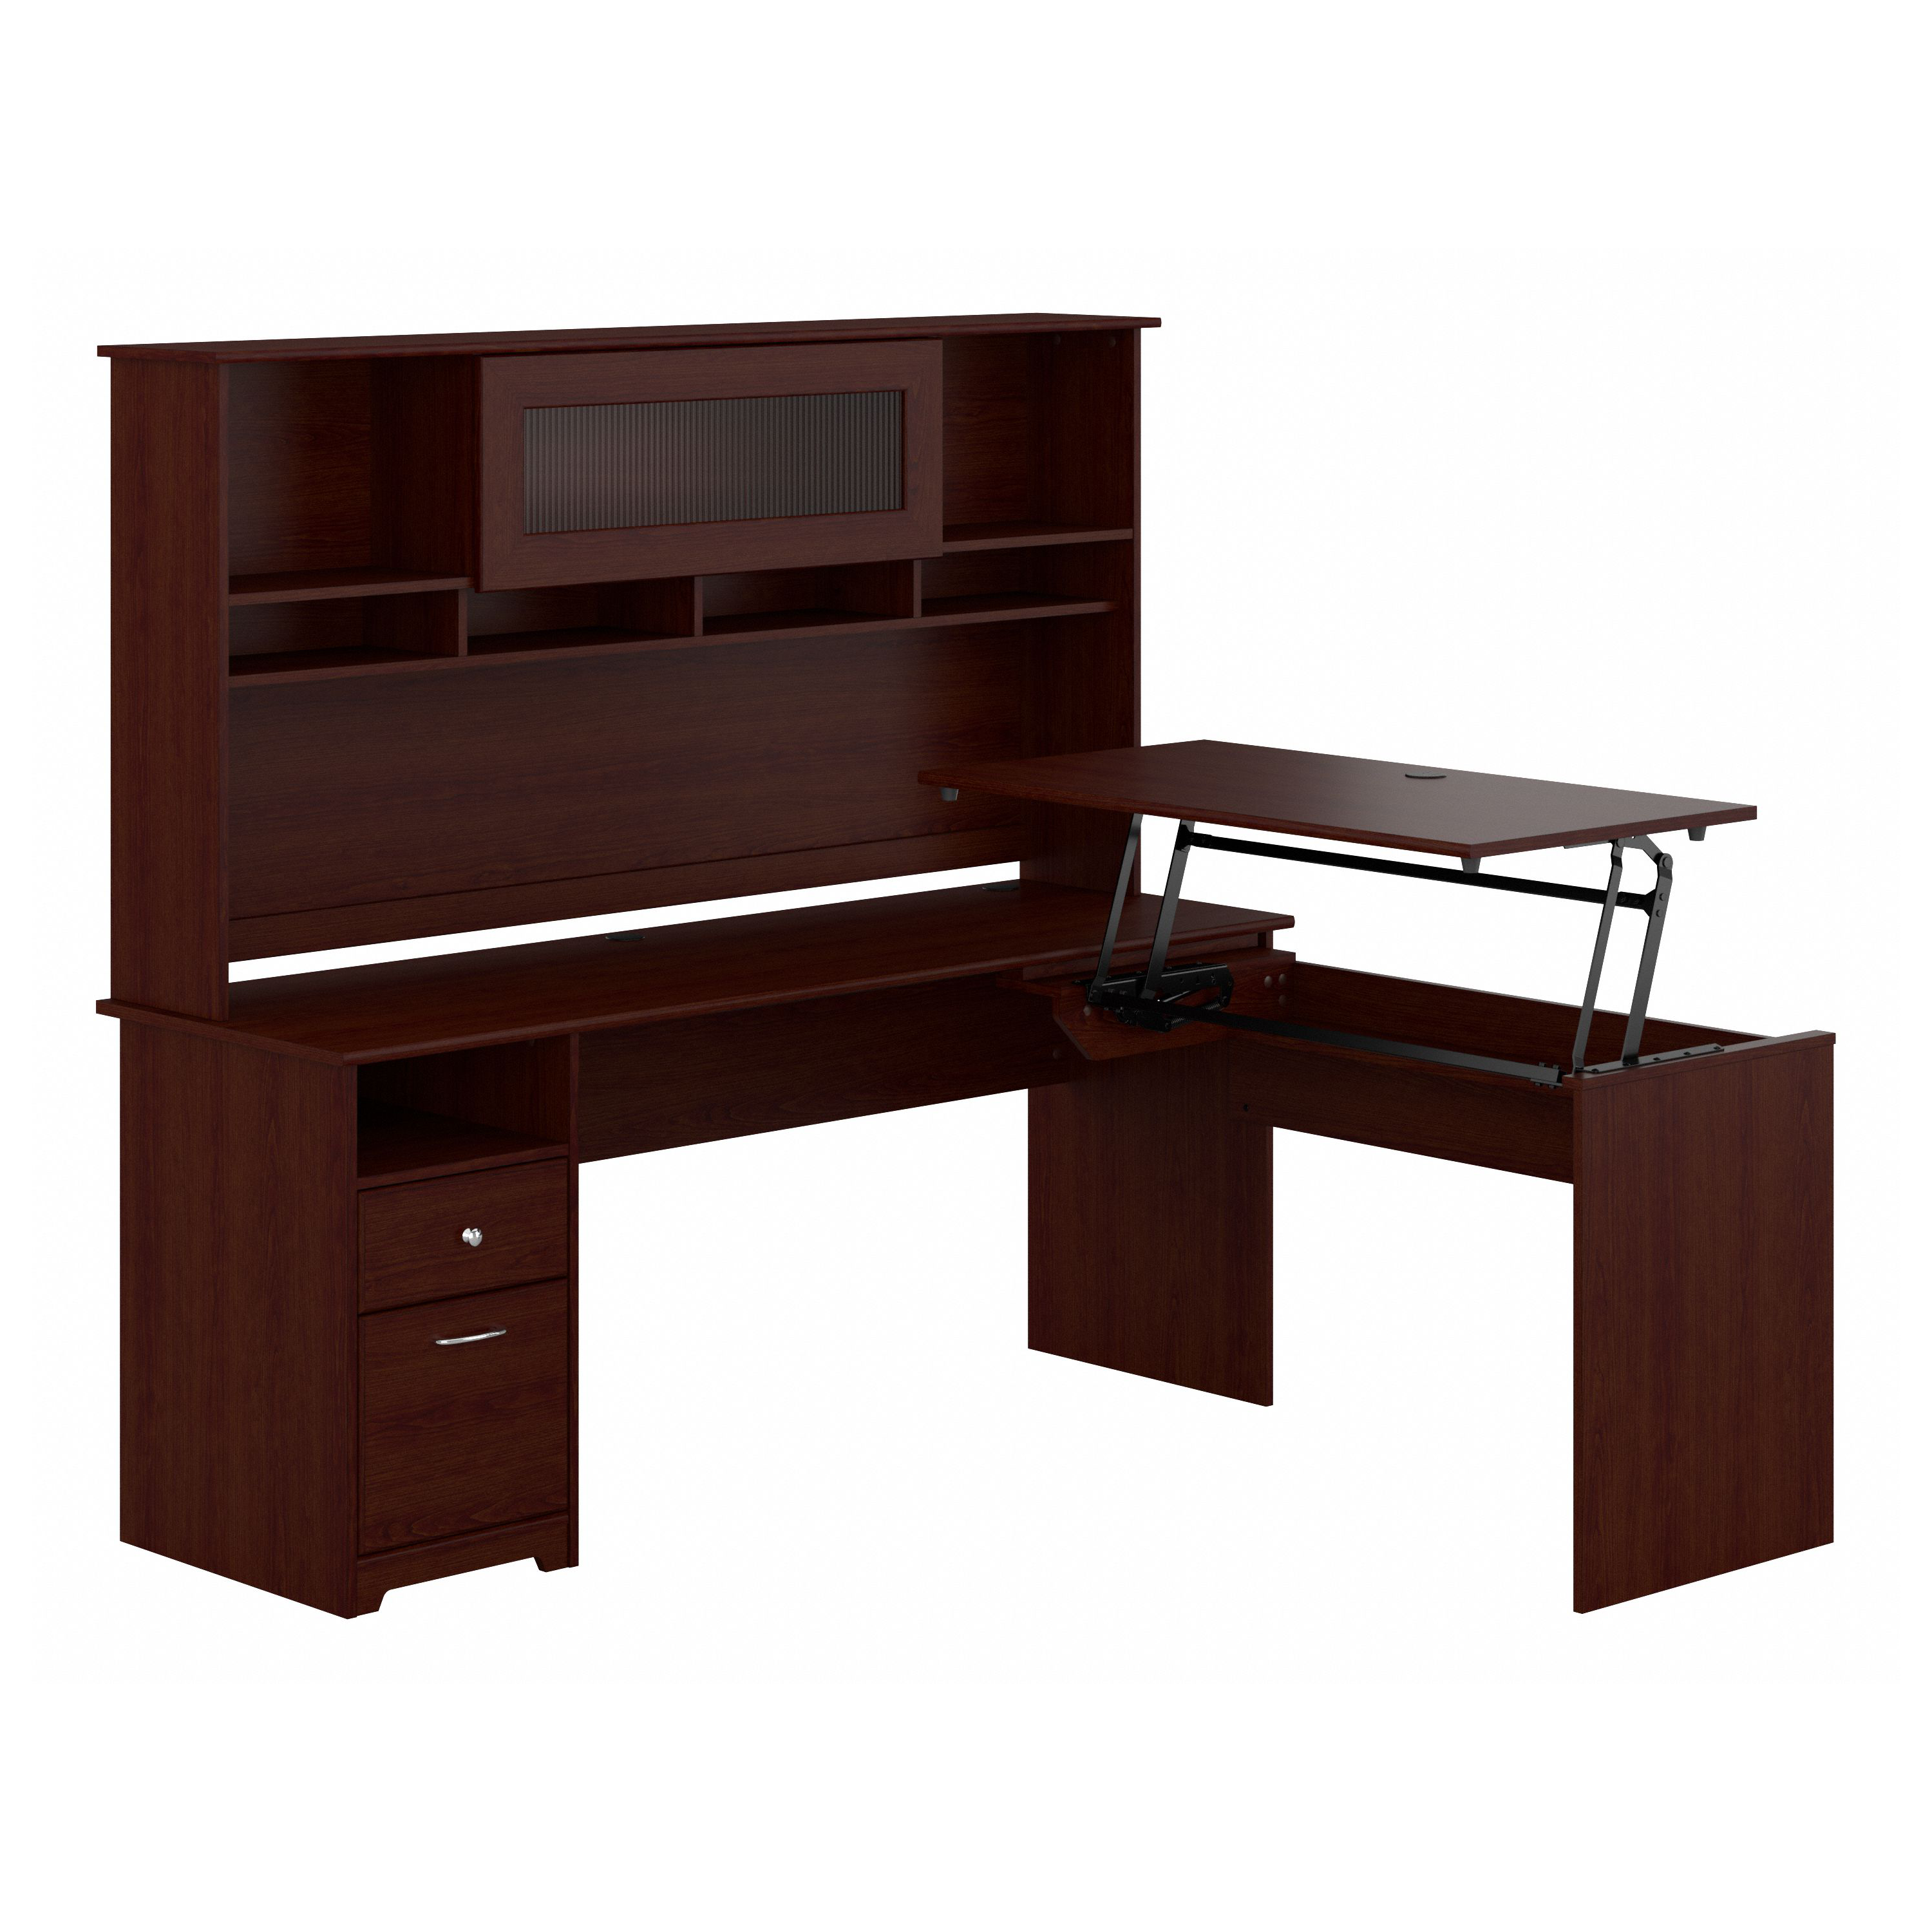 Shop Bush Furniture Cabot 72W 3 Position Sit to Stand L Shaped Desk with Hutch 02 CAB052HVC #color_harvest cherry